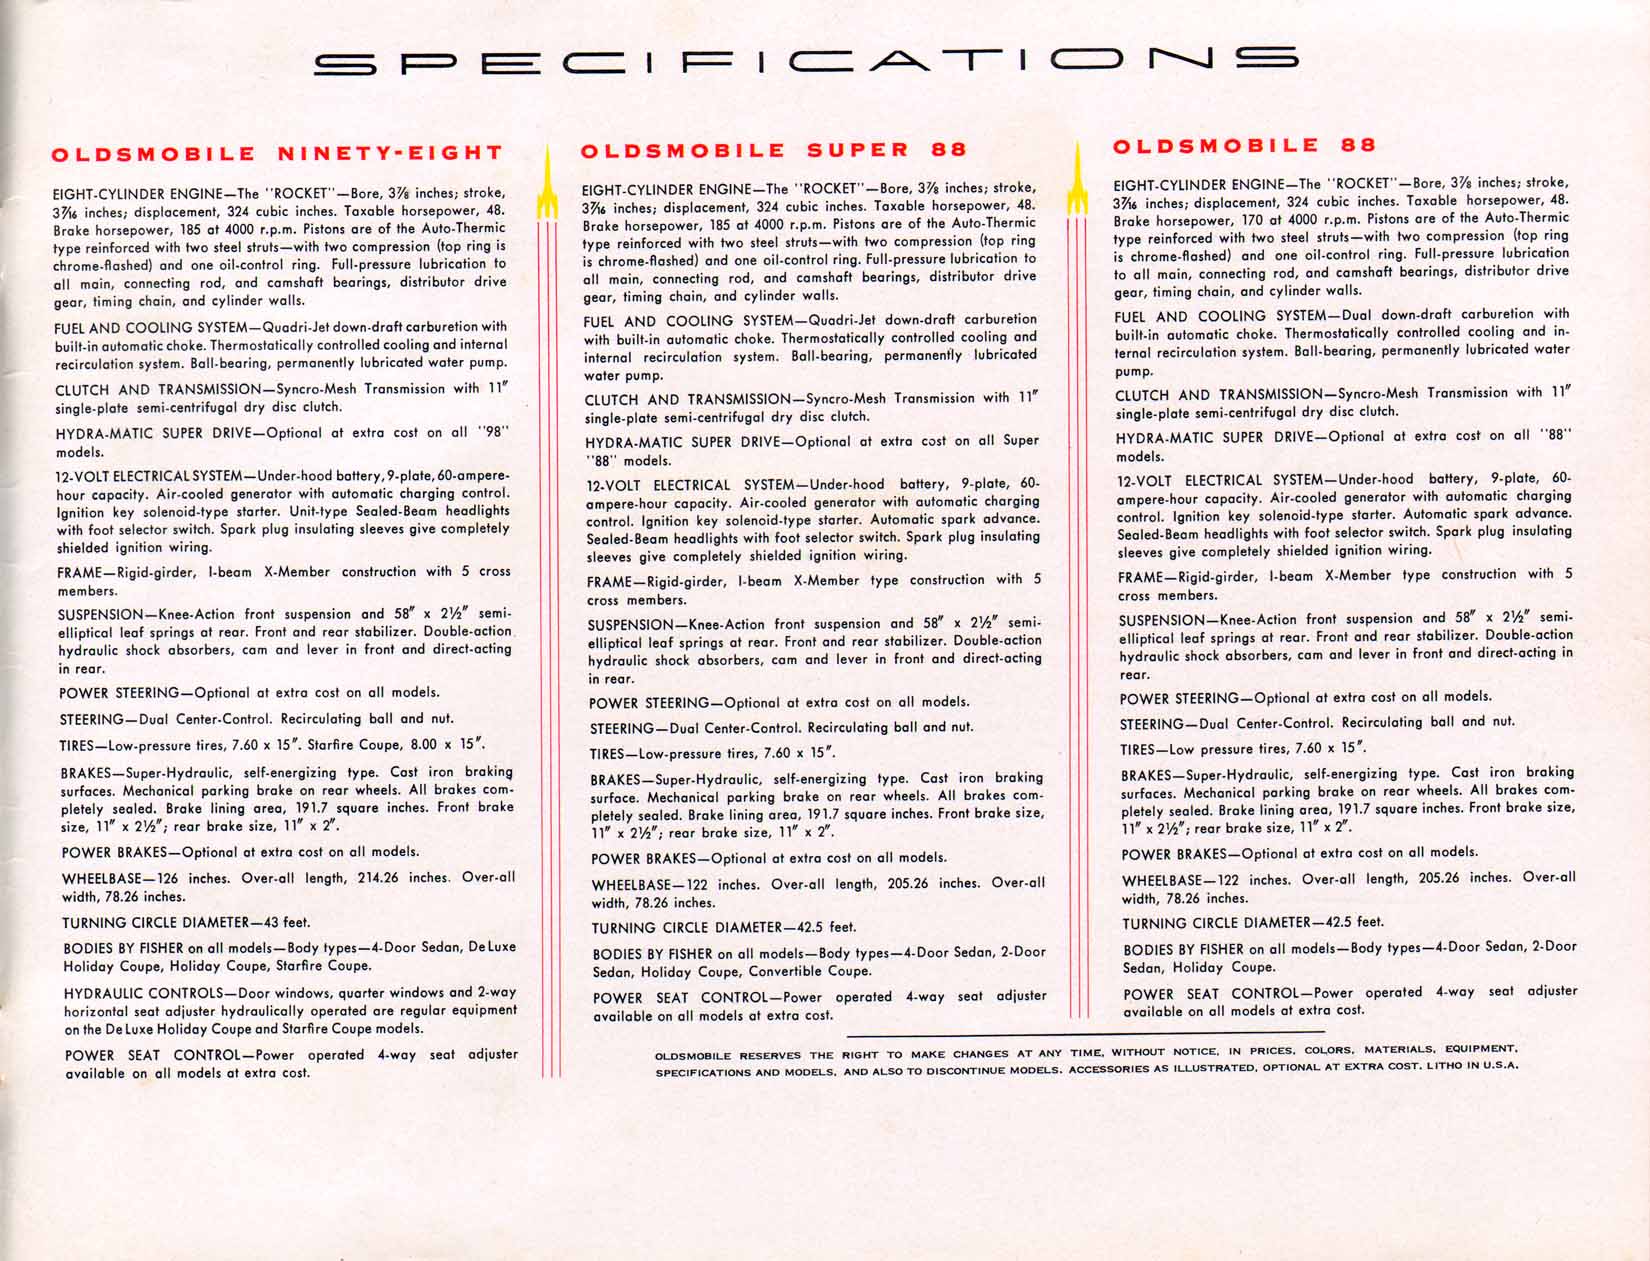 1954 Oldsmobile Motor Cars Brochure Page 13